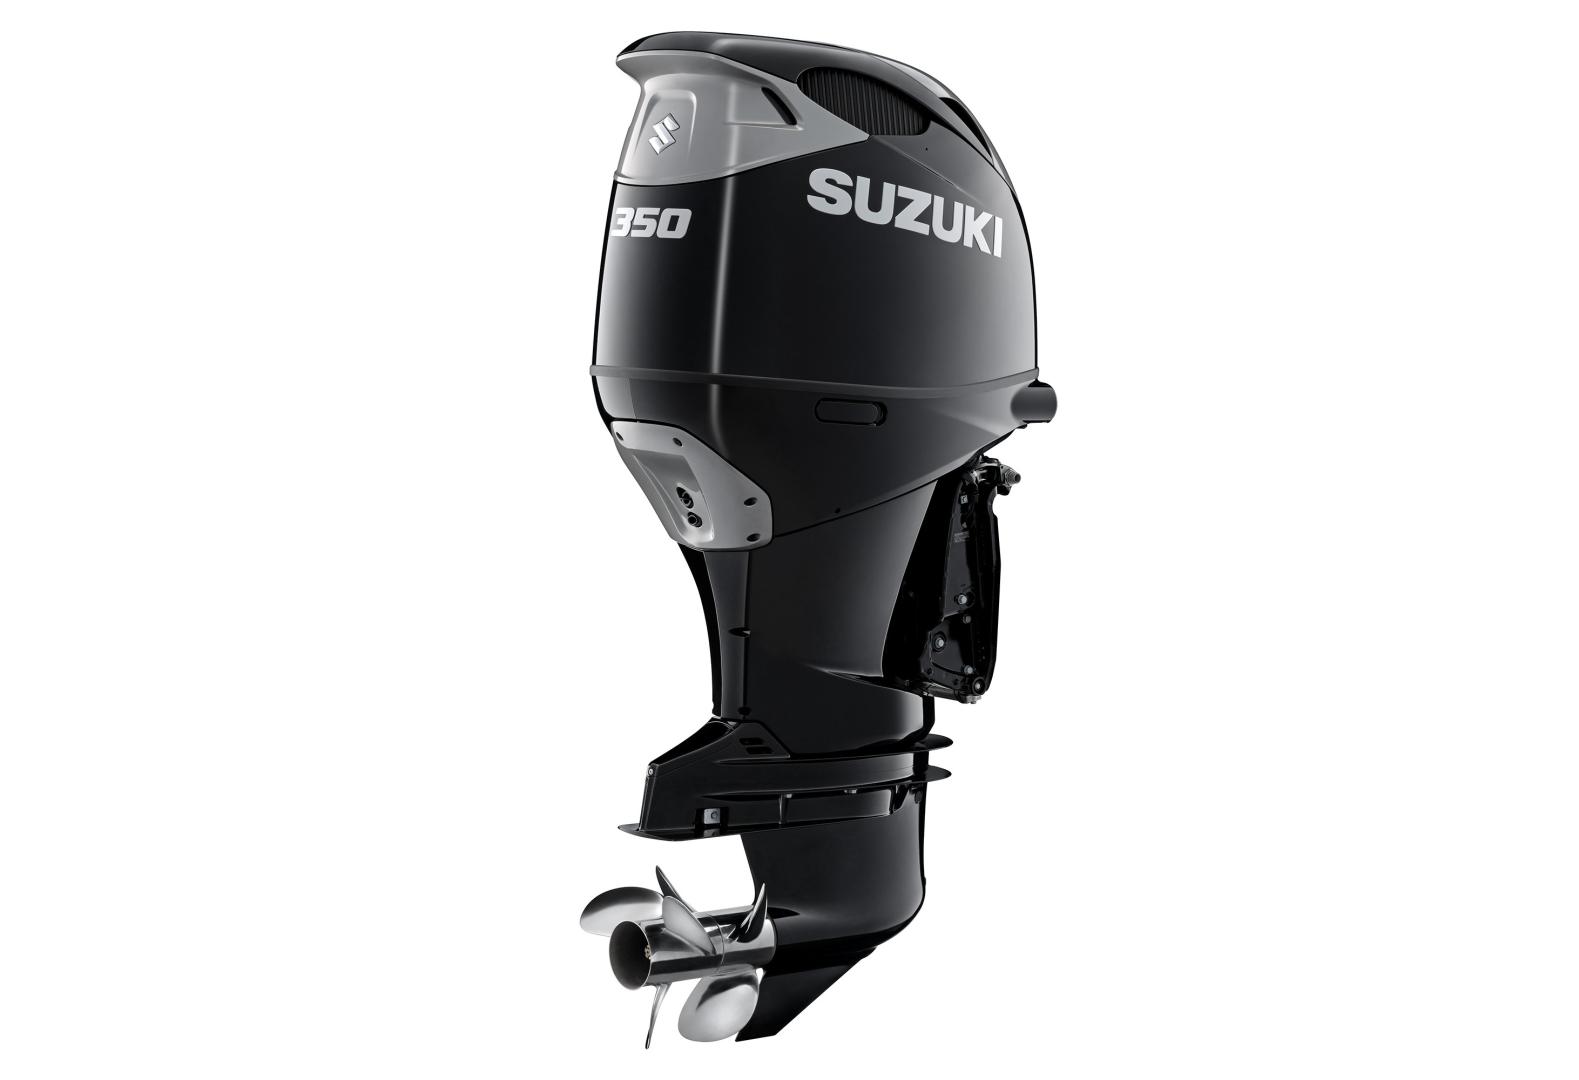 Suzuki's new four-stroke outboard motor, the DF350A